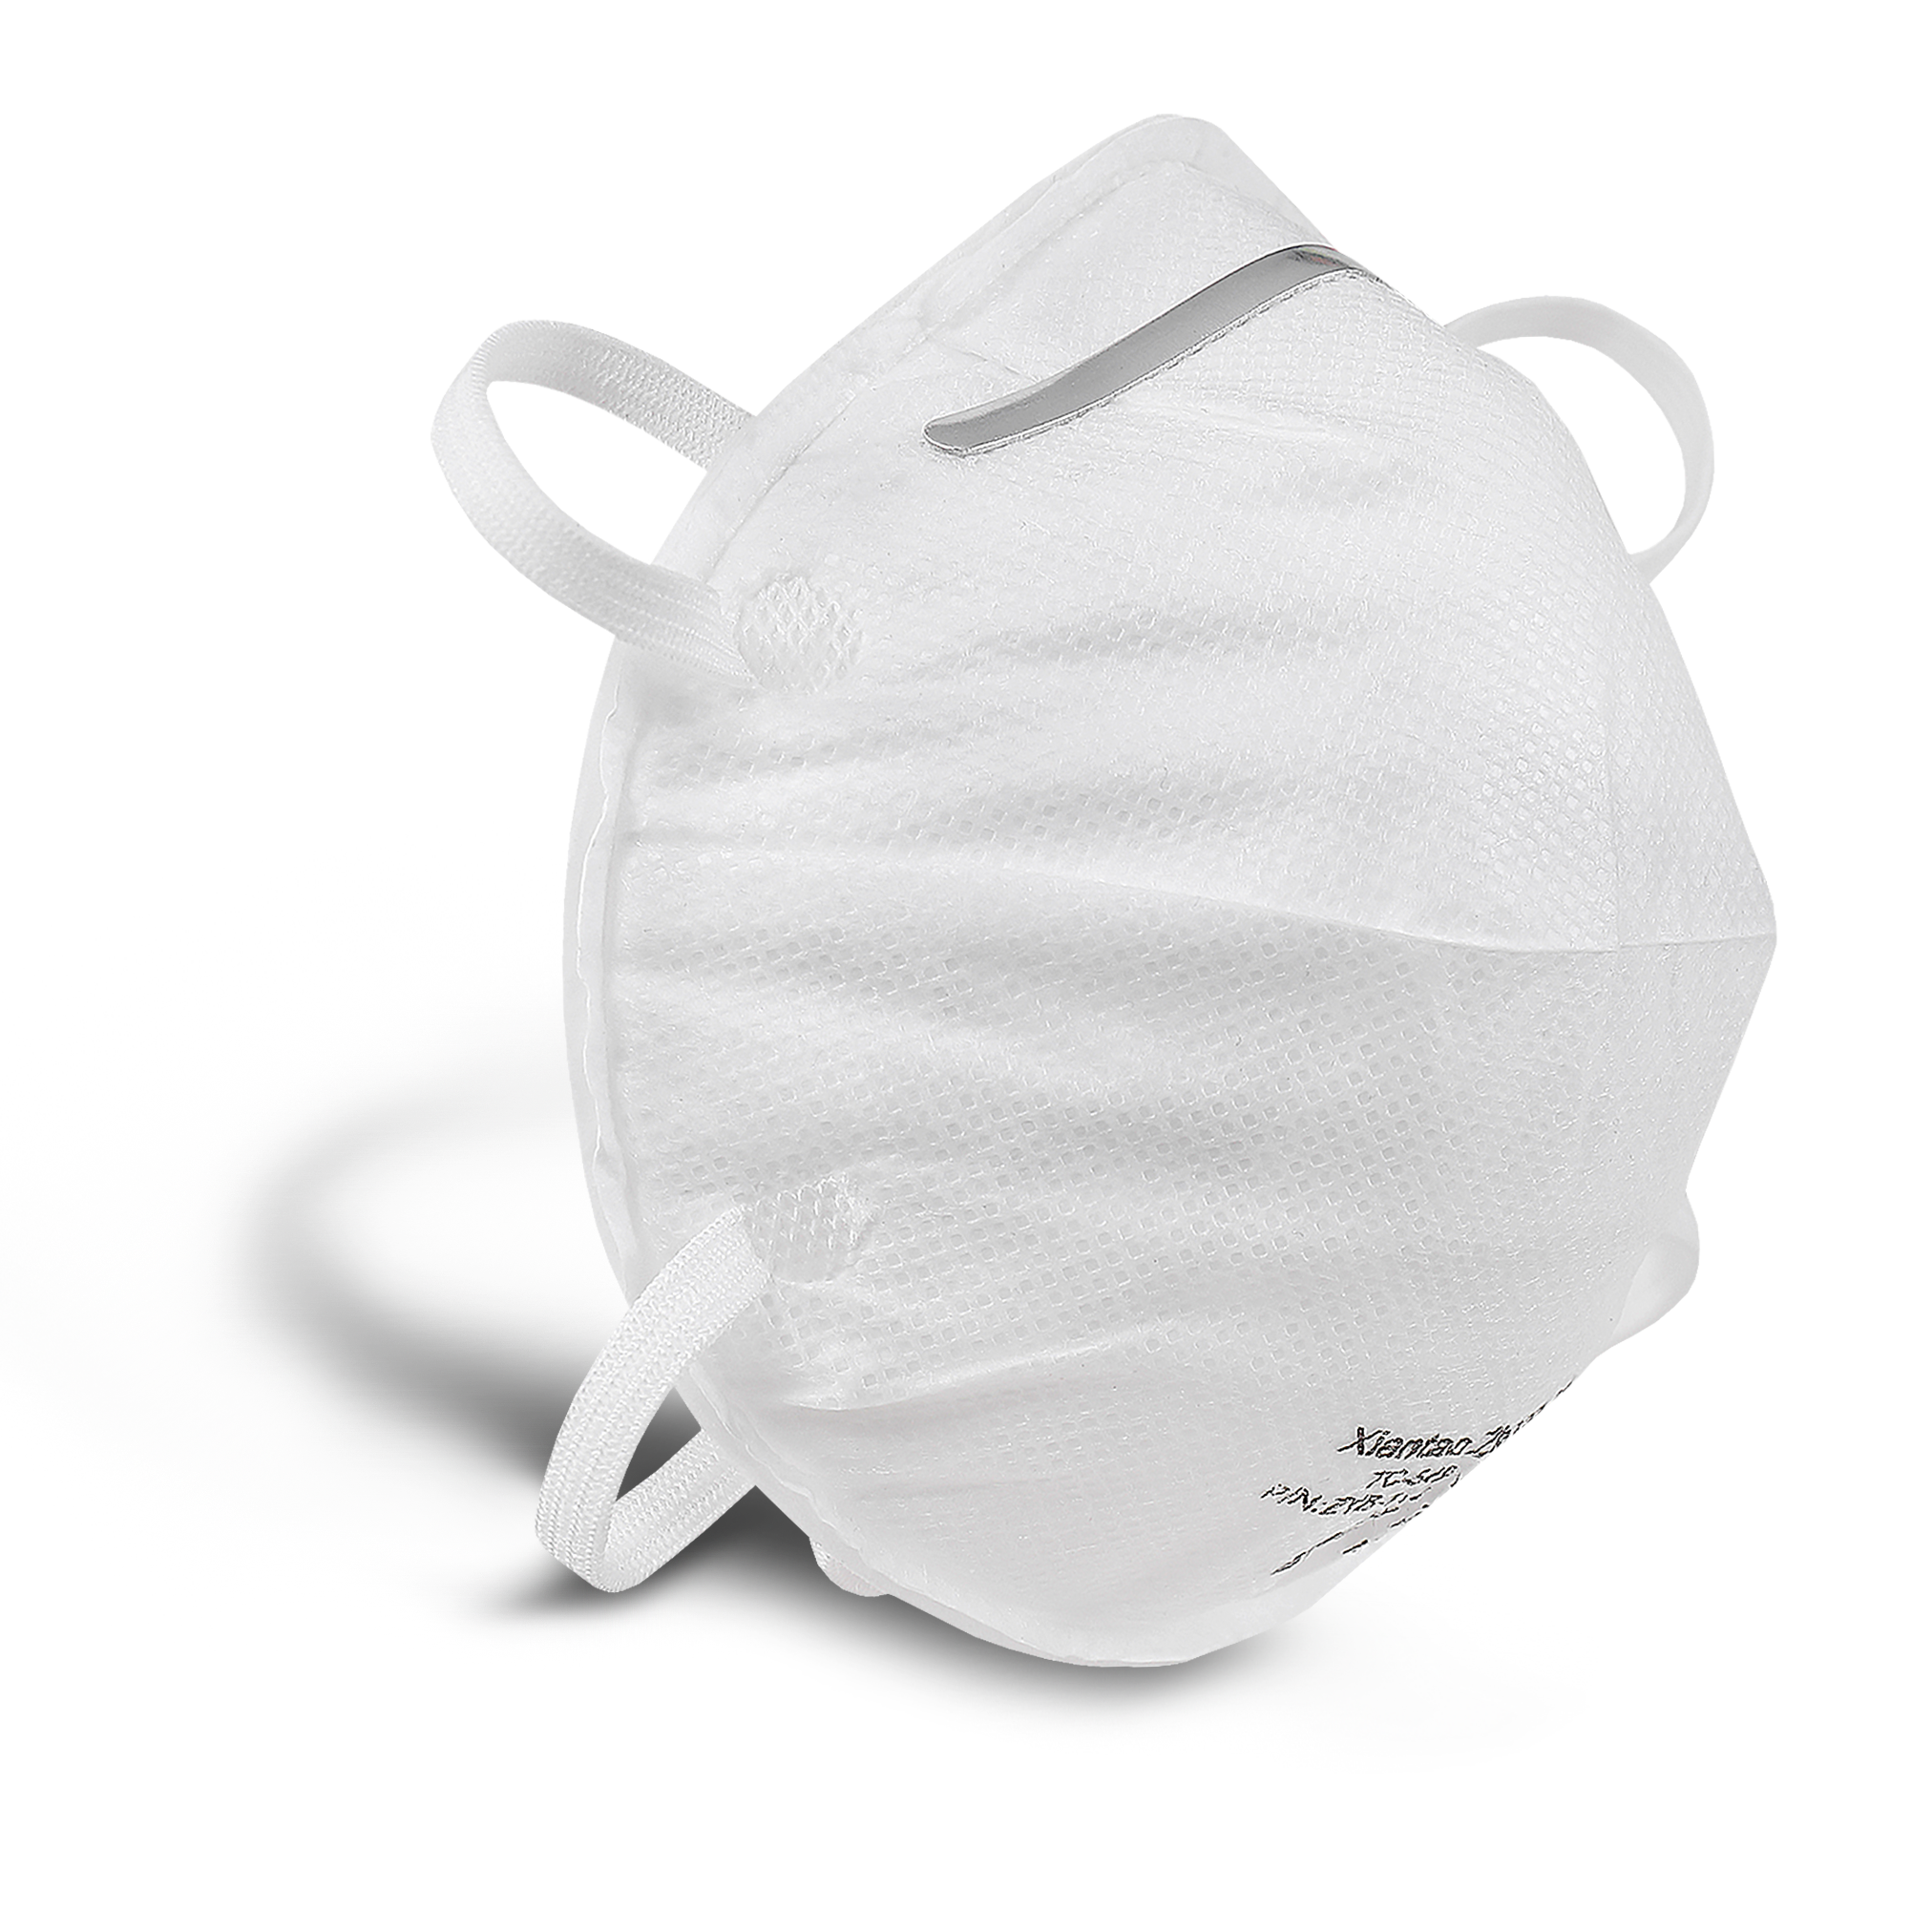 NIOSH Cup Style N95 Respirator Mask - 100 Pack